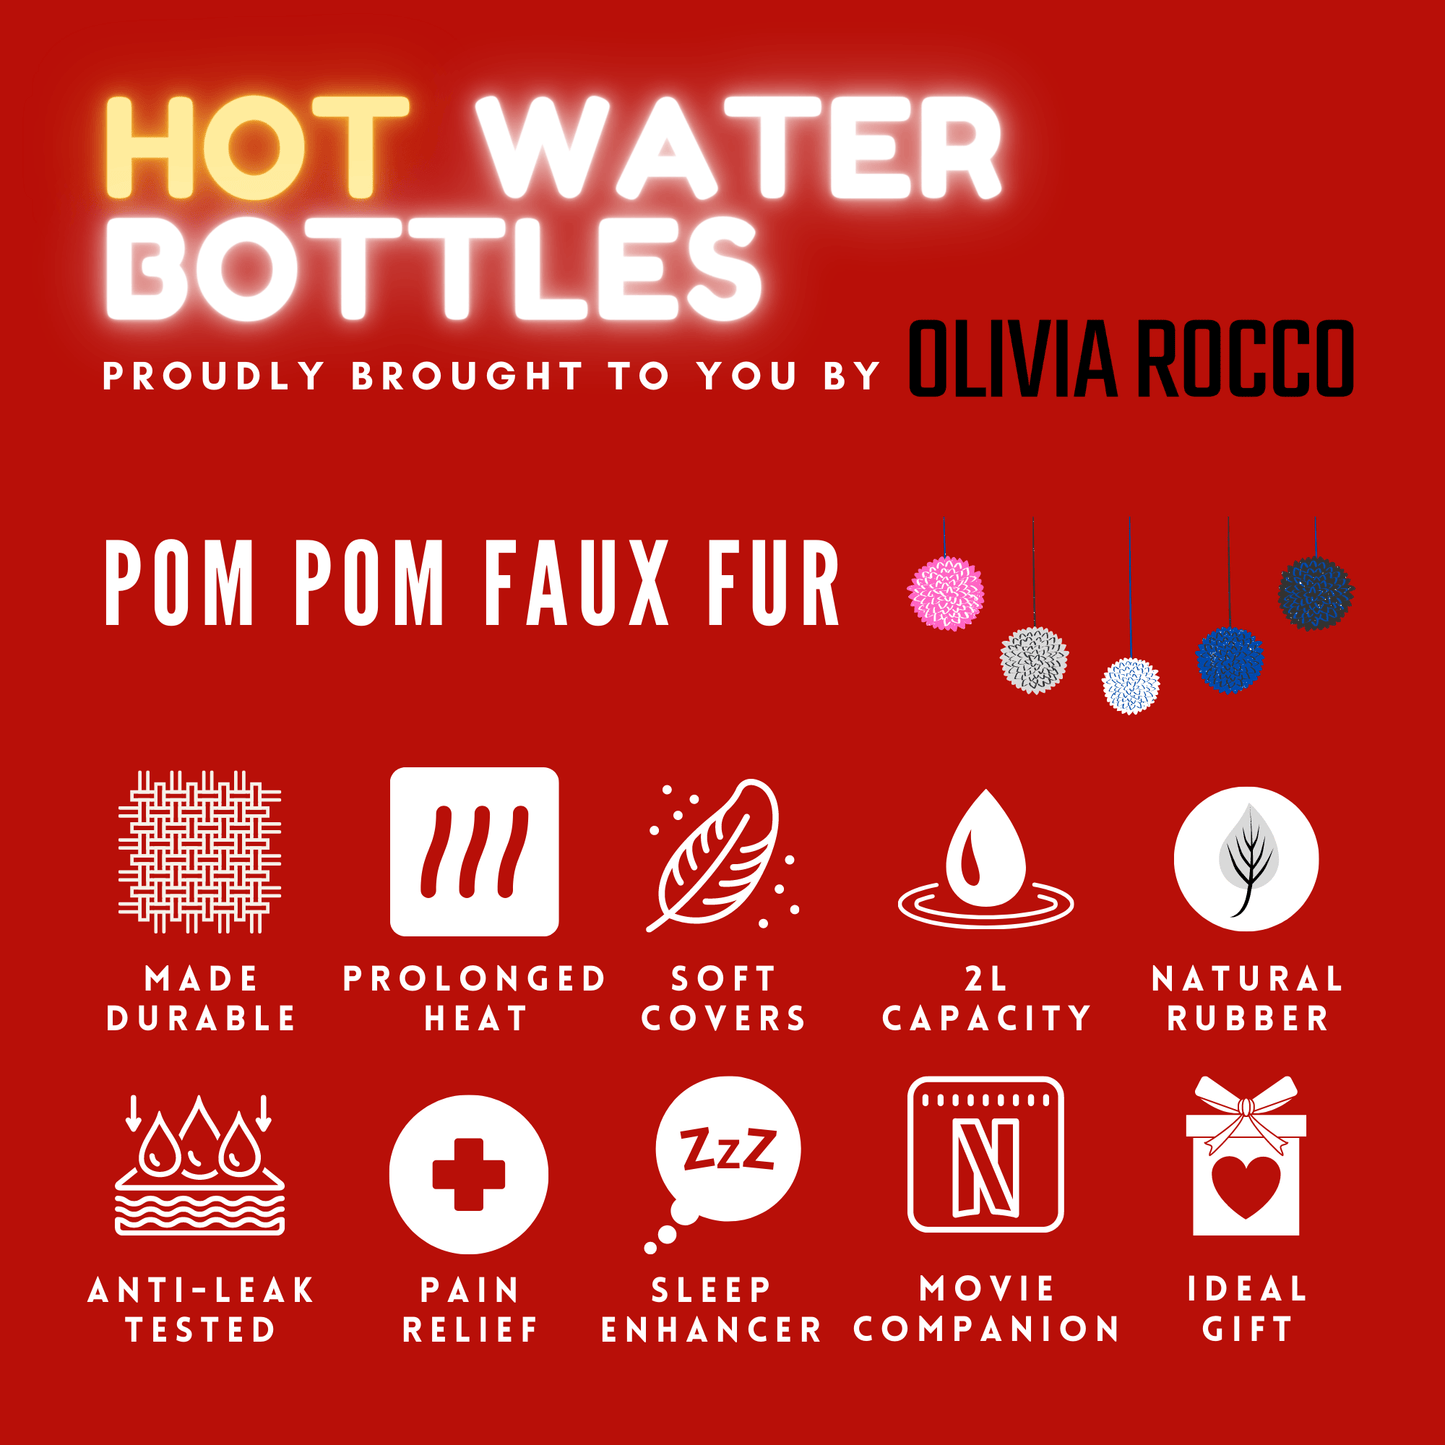 Faux Fur Pom Pom Hot Water Bottle, 2L Capacity OLIVIA ROCCO Hot Water Bottle